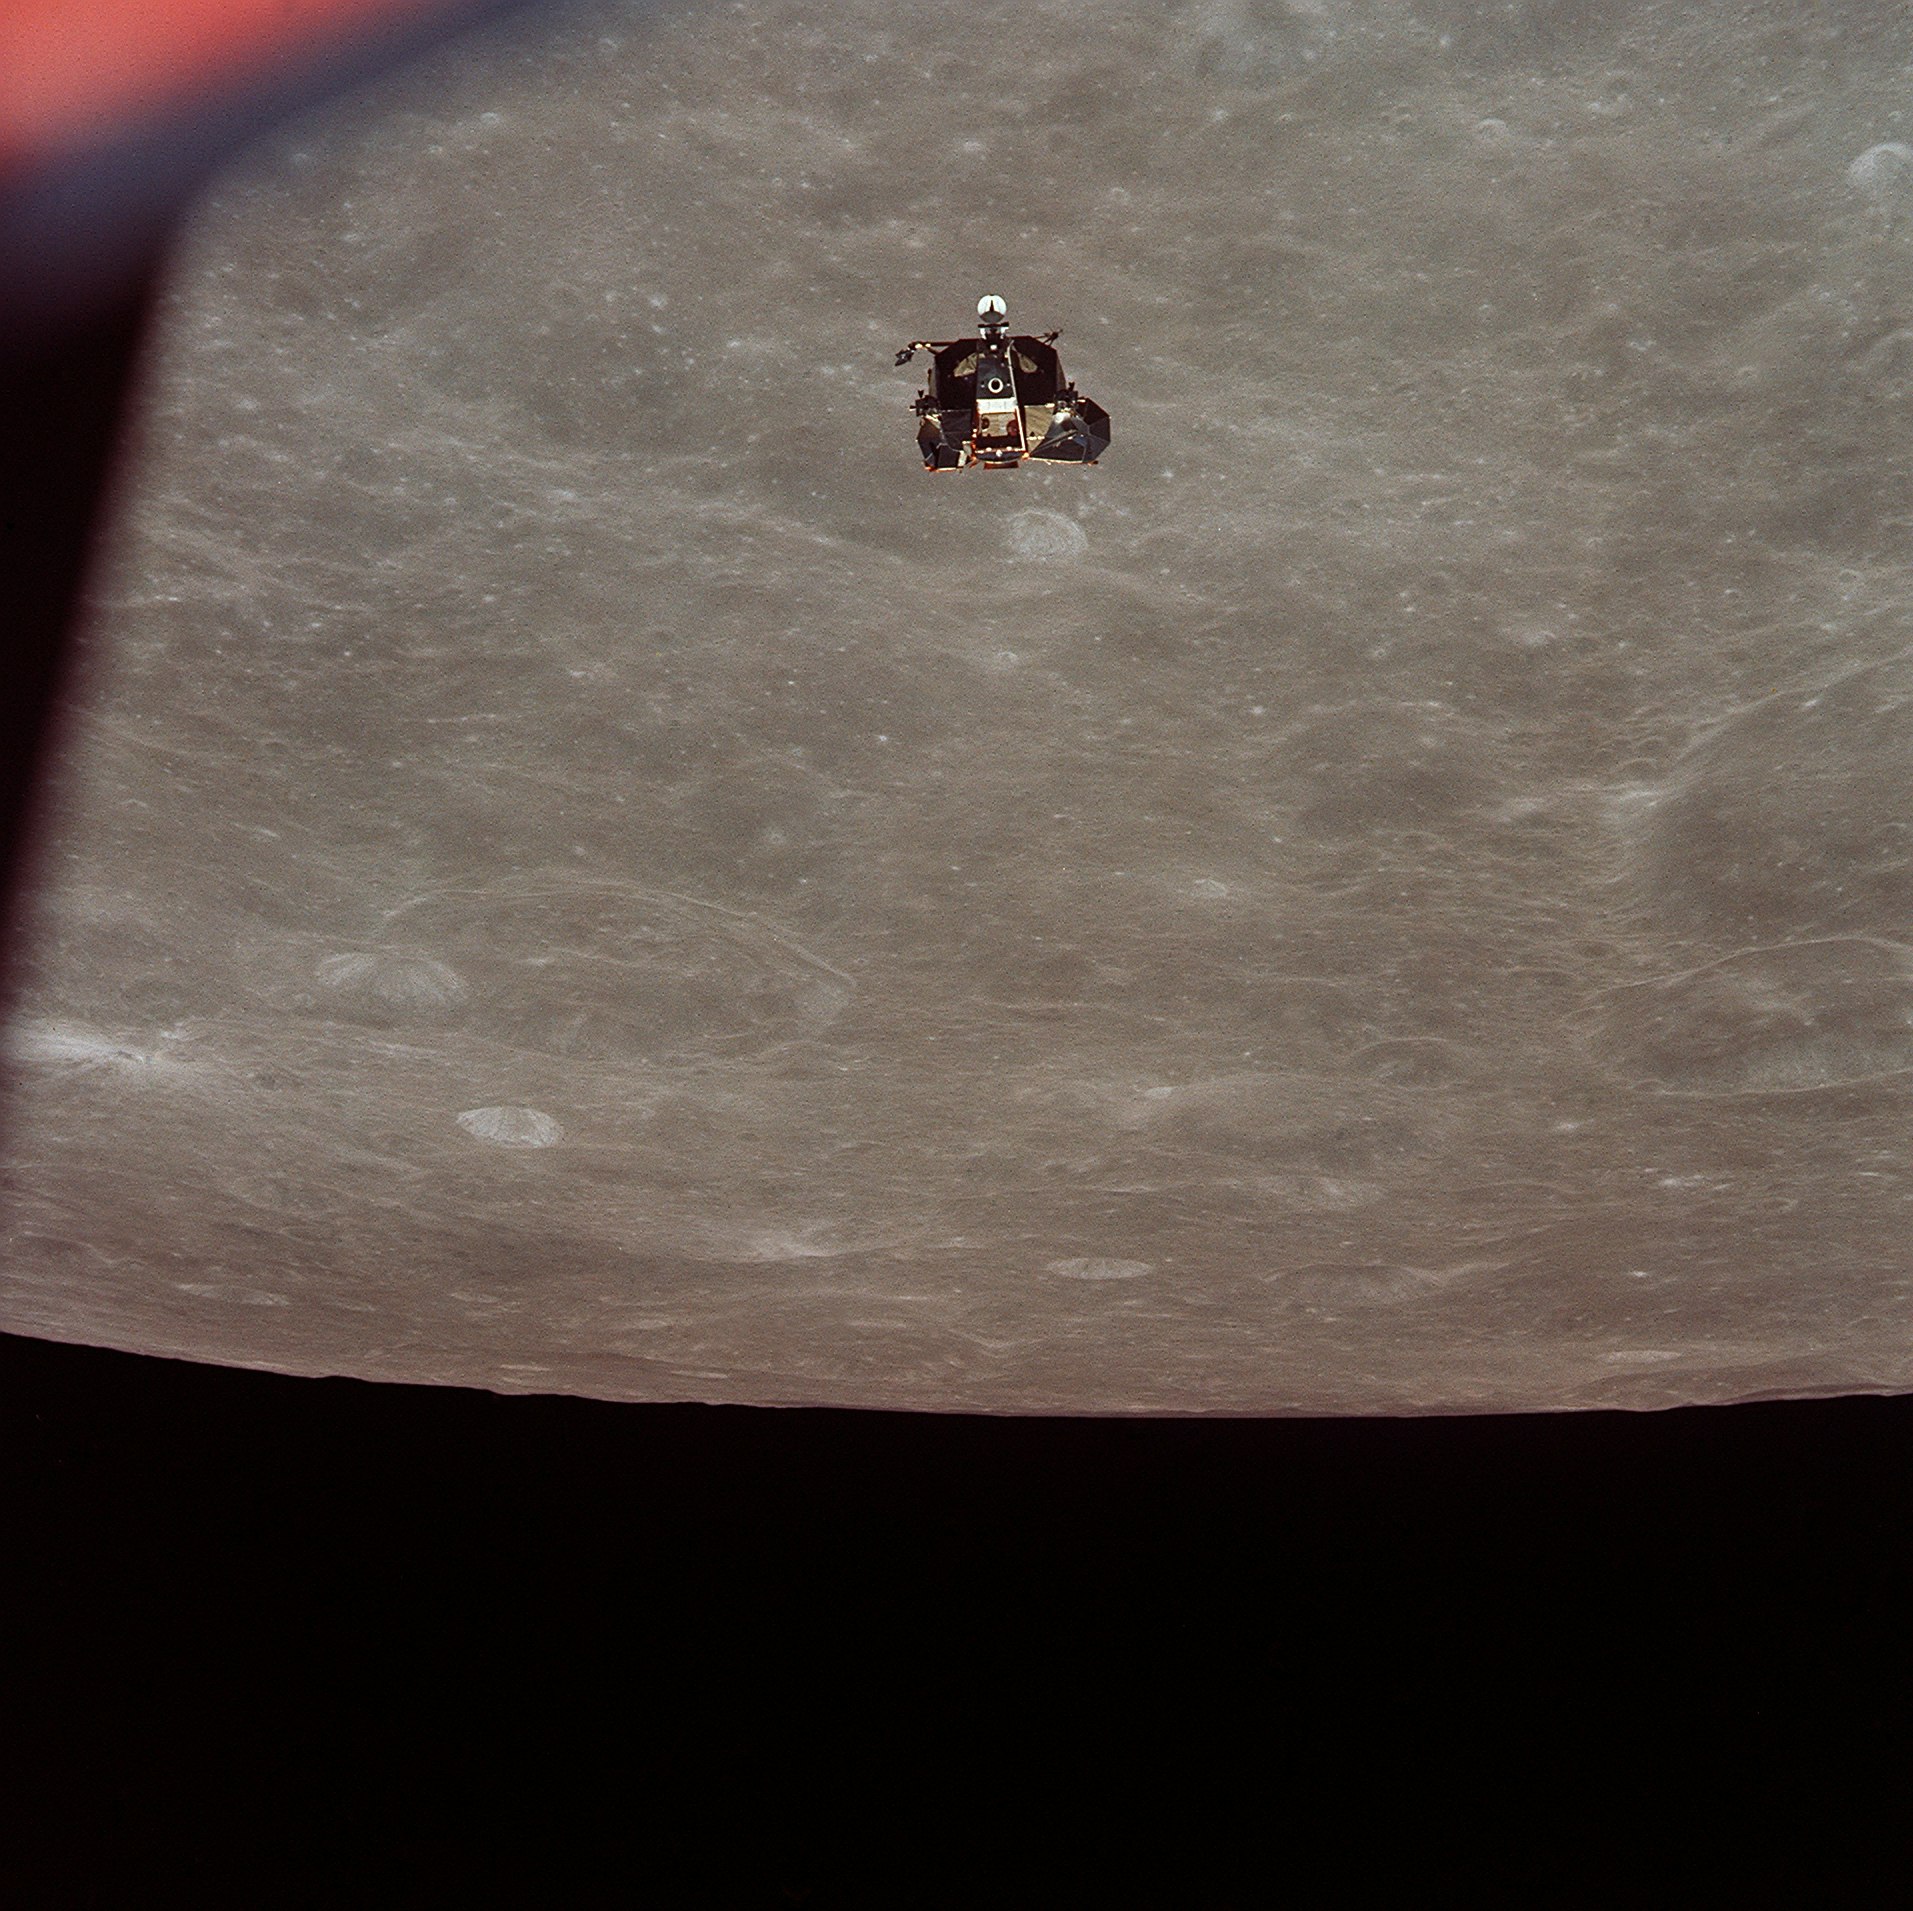 The Apollo 11 Lunar Module (LM) ascent stage